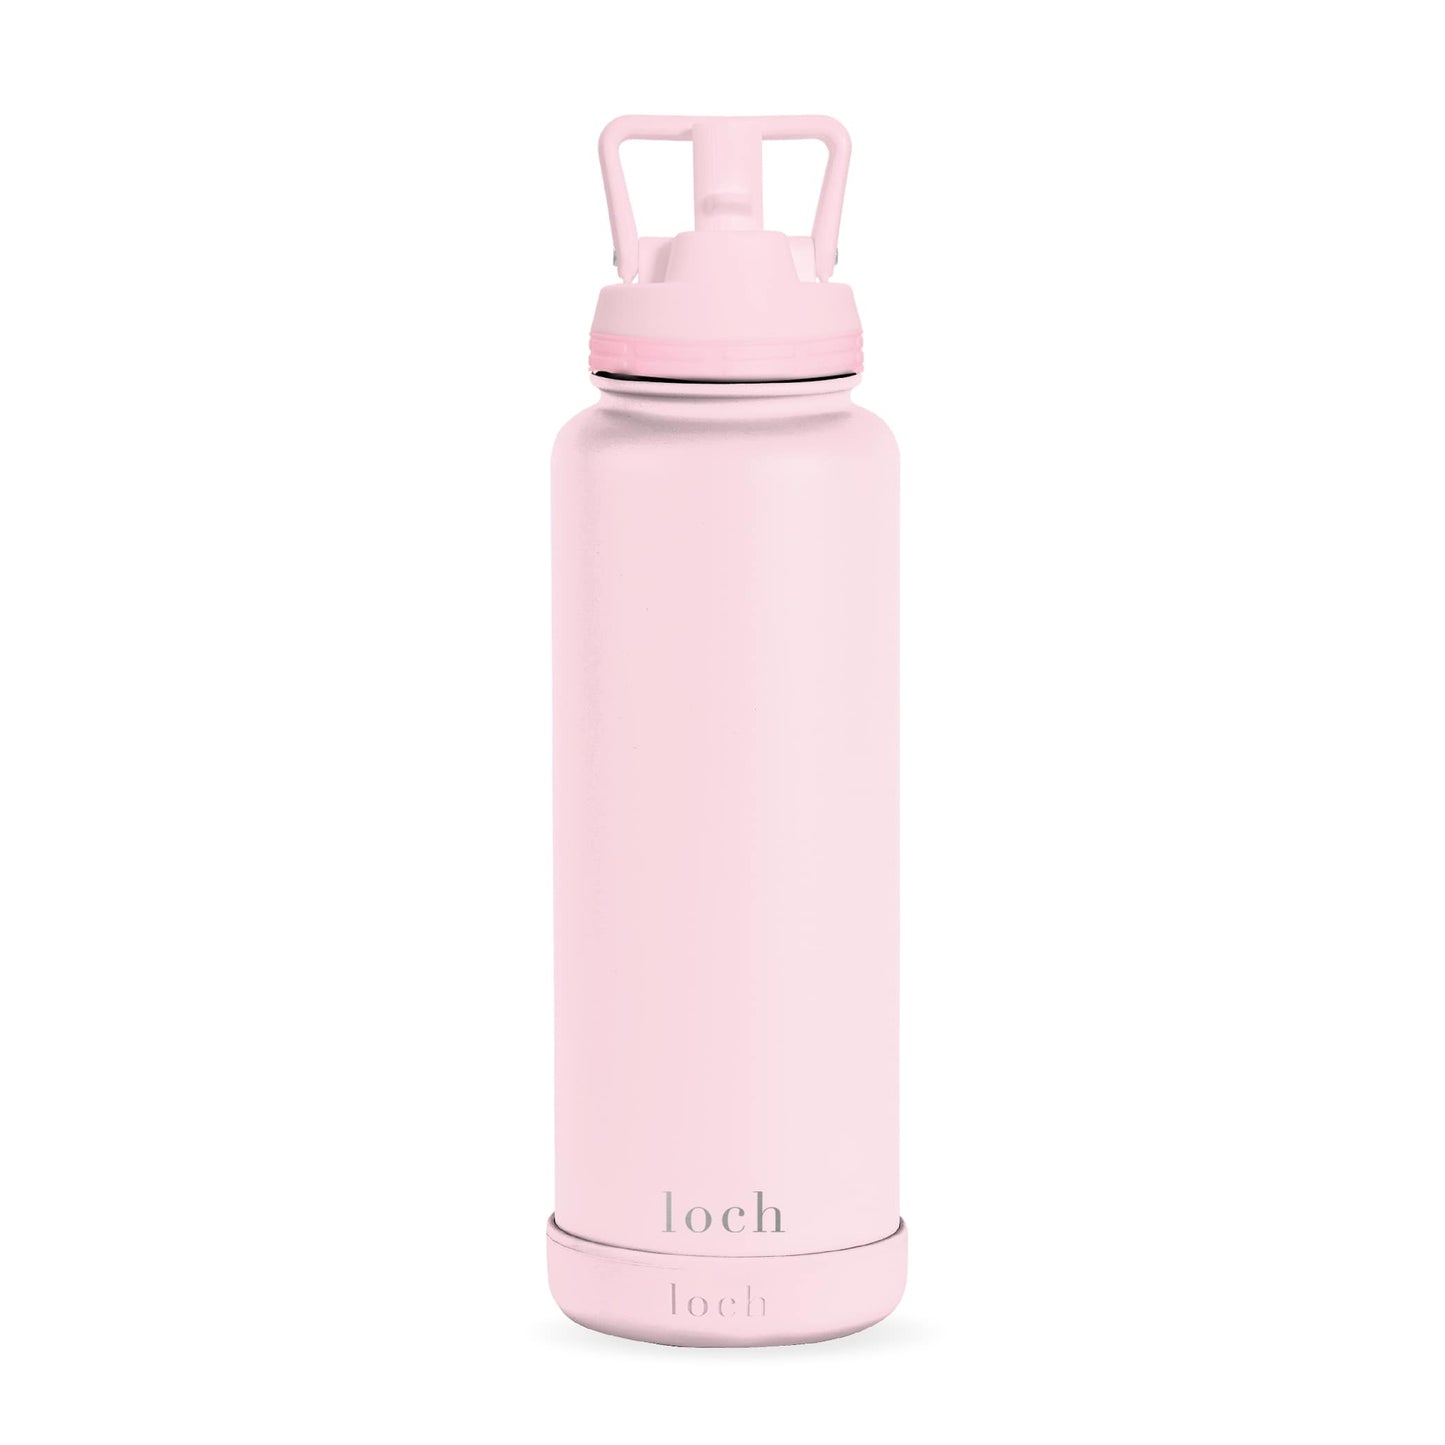 Monochrome Bottle - Baby Pink 1,200ml (40 Oz)